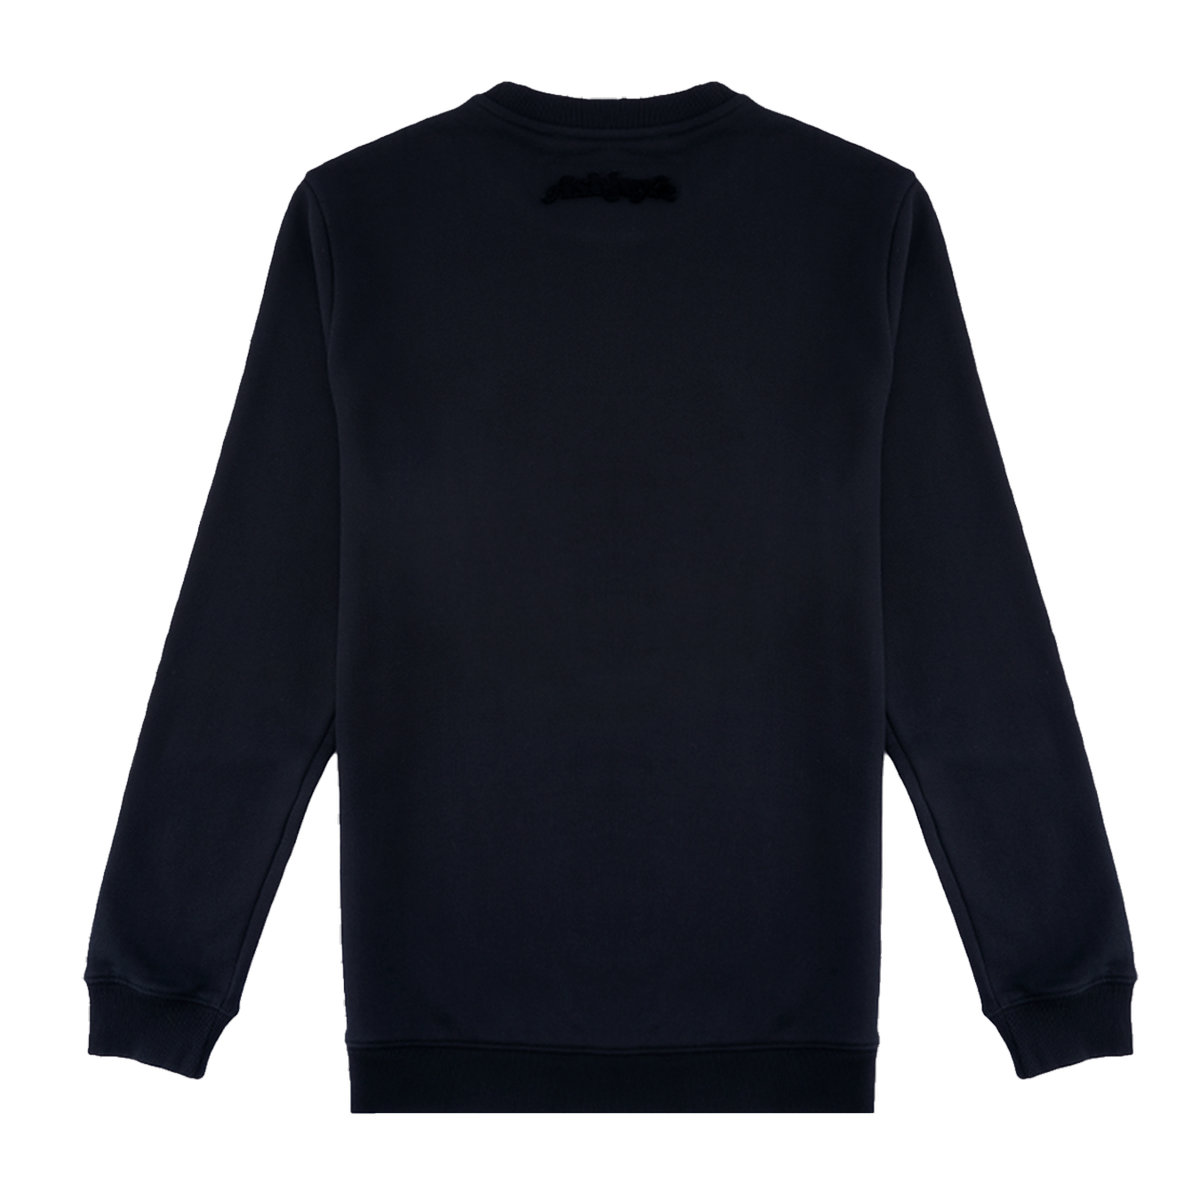 Ashluxe Emblem Sweatshirt Black